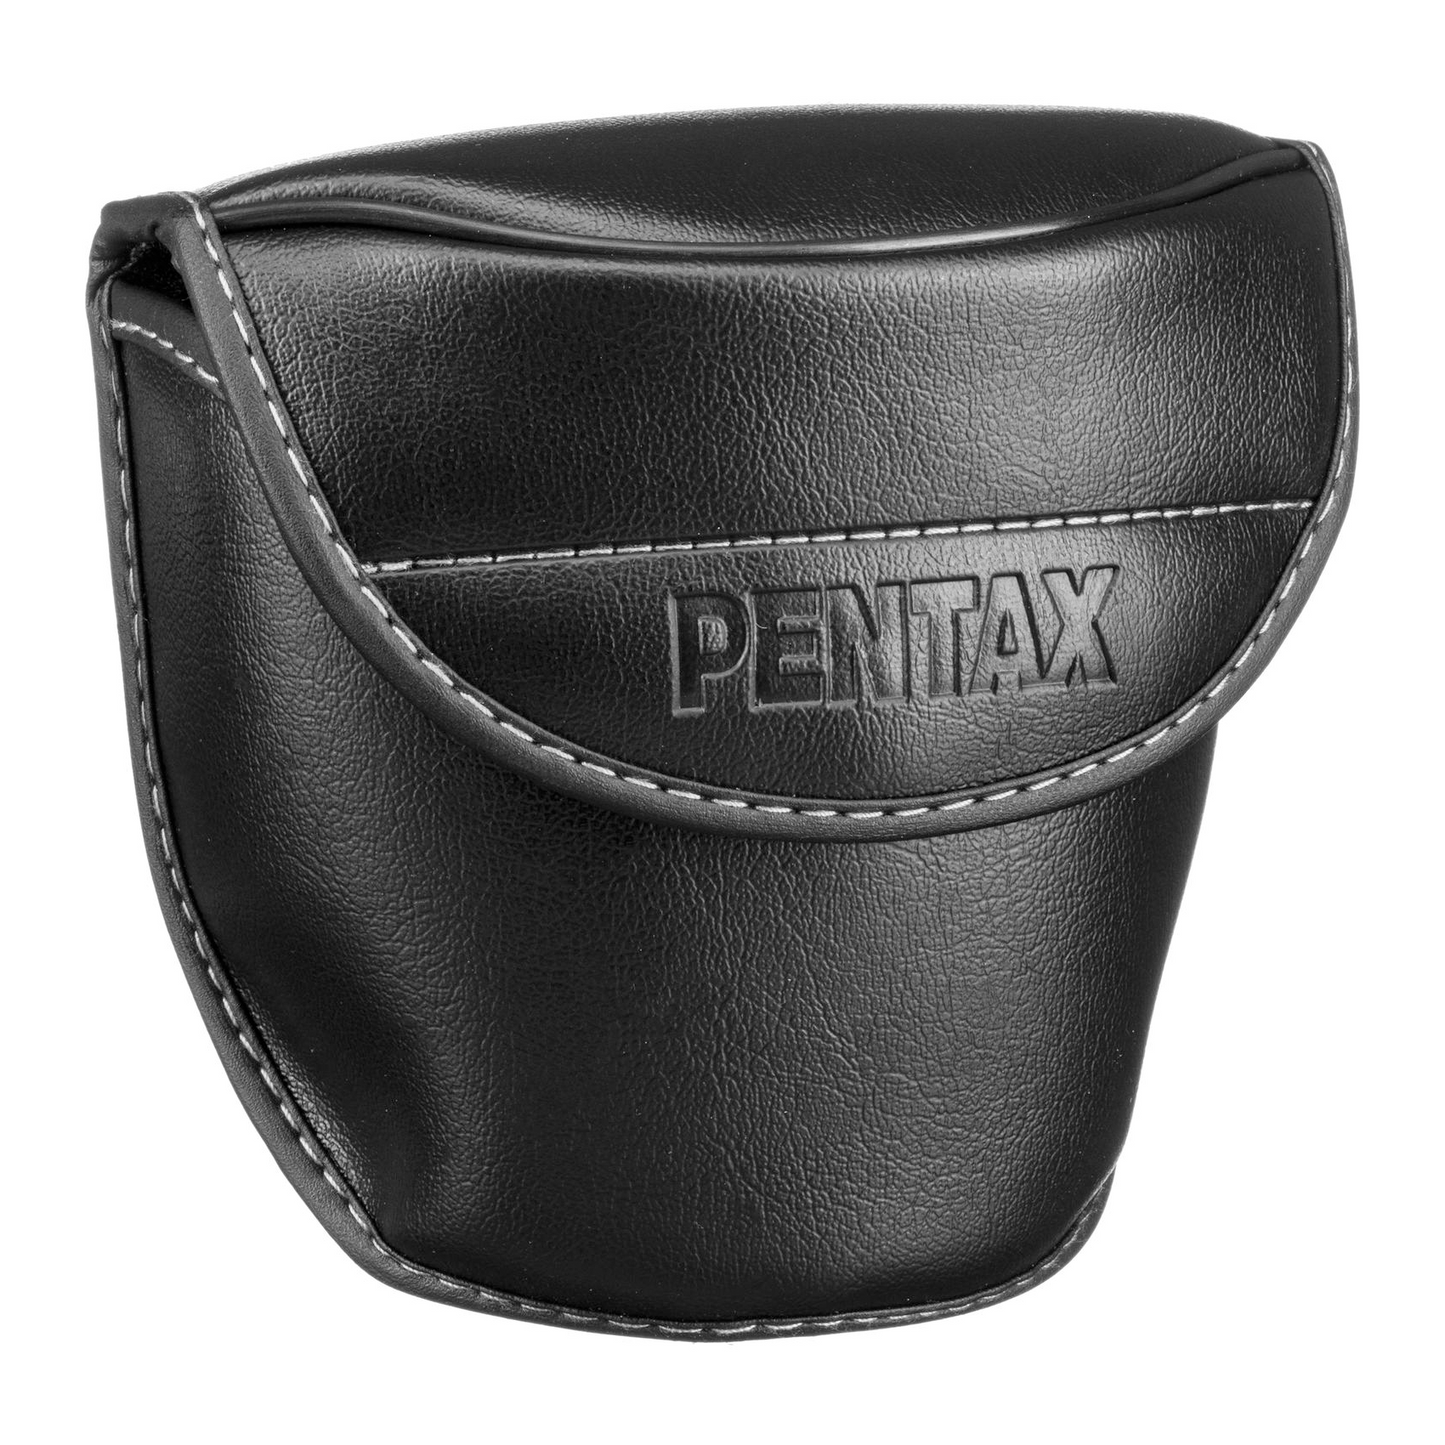 Pentax 8-16x21 U-Series UP Binoculars (Black)